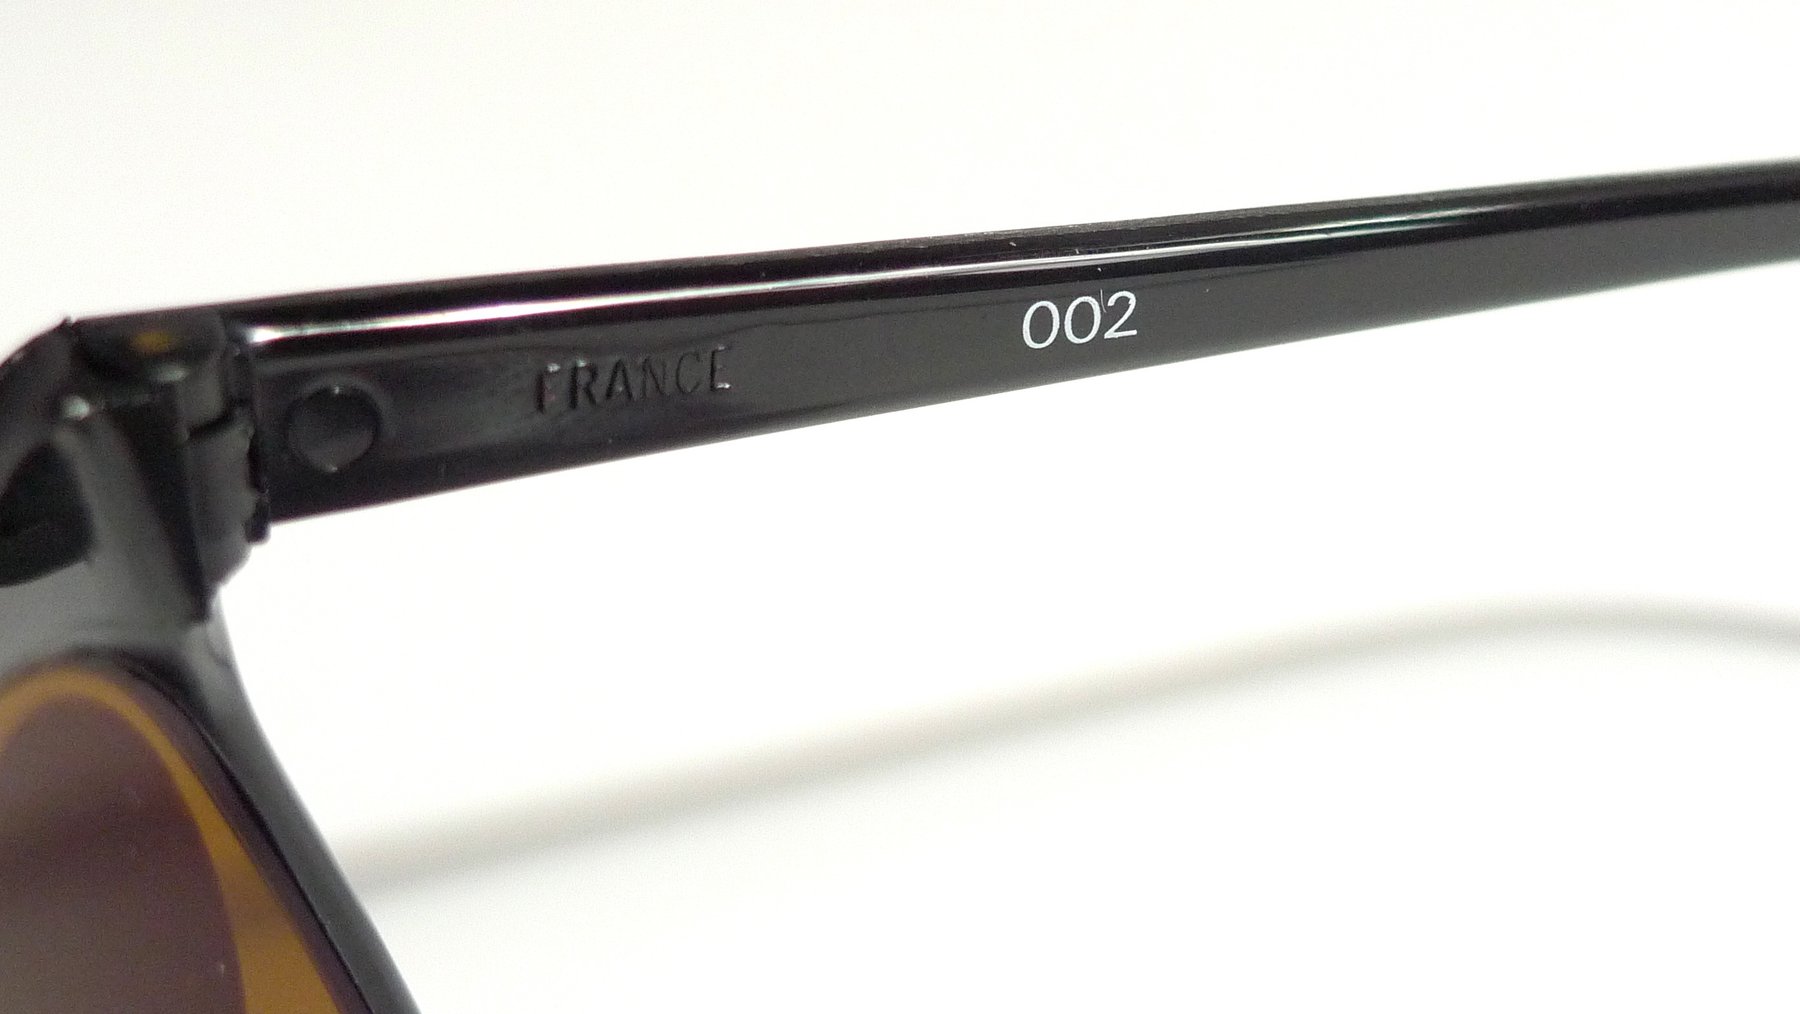 Louis Vuitton - Conspiration Pilot Z0659U Sunglasses - Catawiki